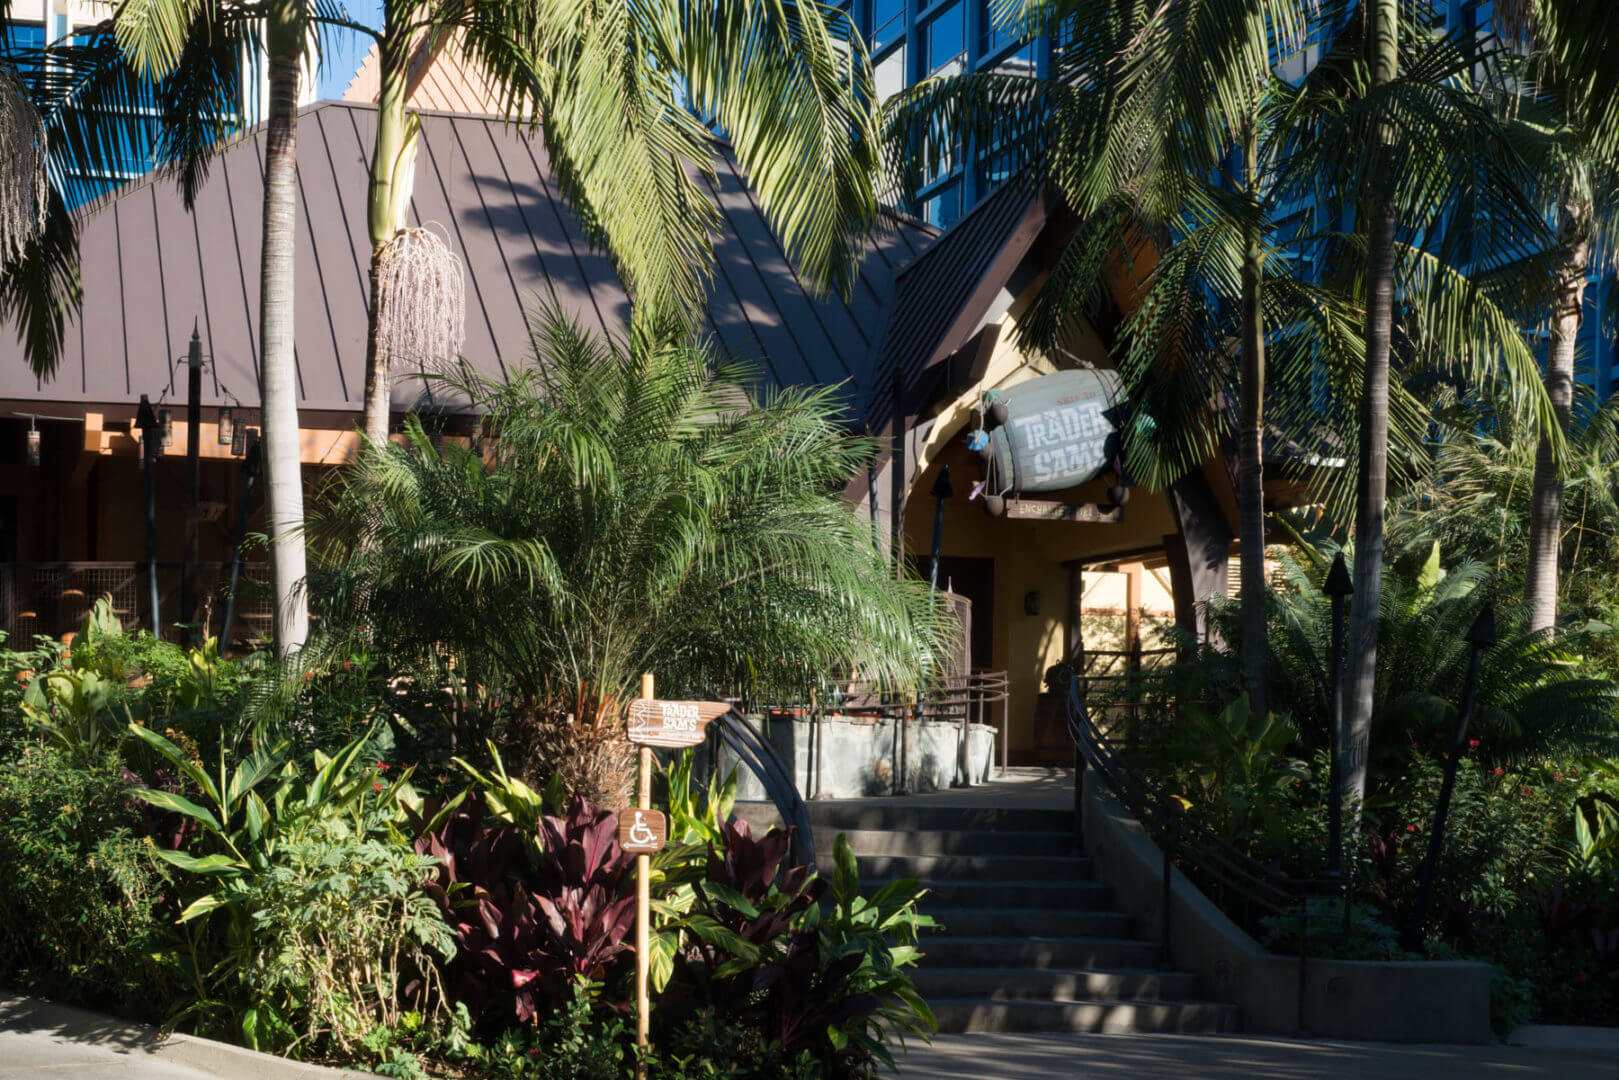 Trader Sam's Enchanted Tiki Bar and Lounge Entrance and Sign - Activities for Adults at Disneyland